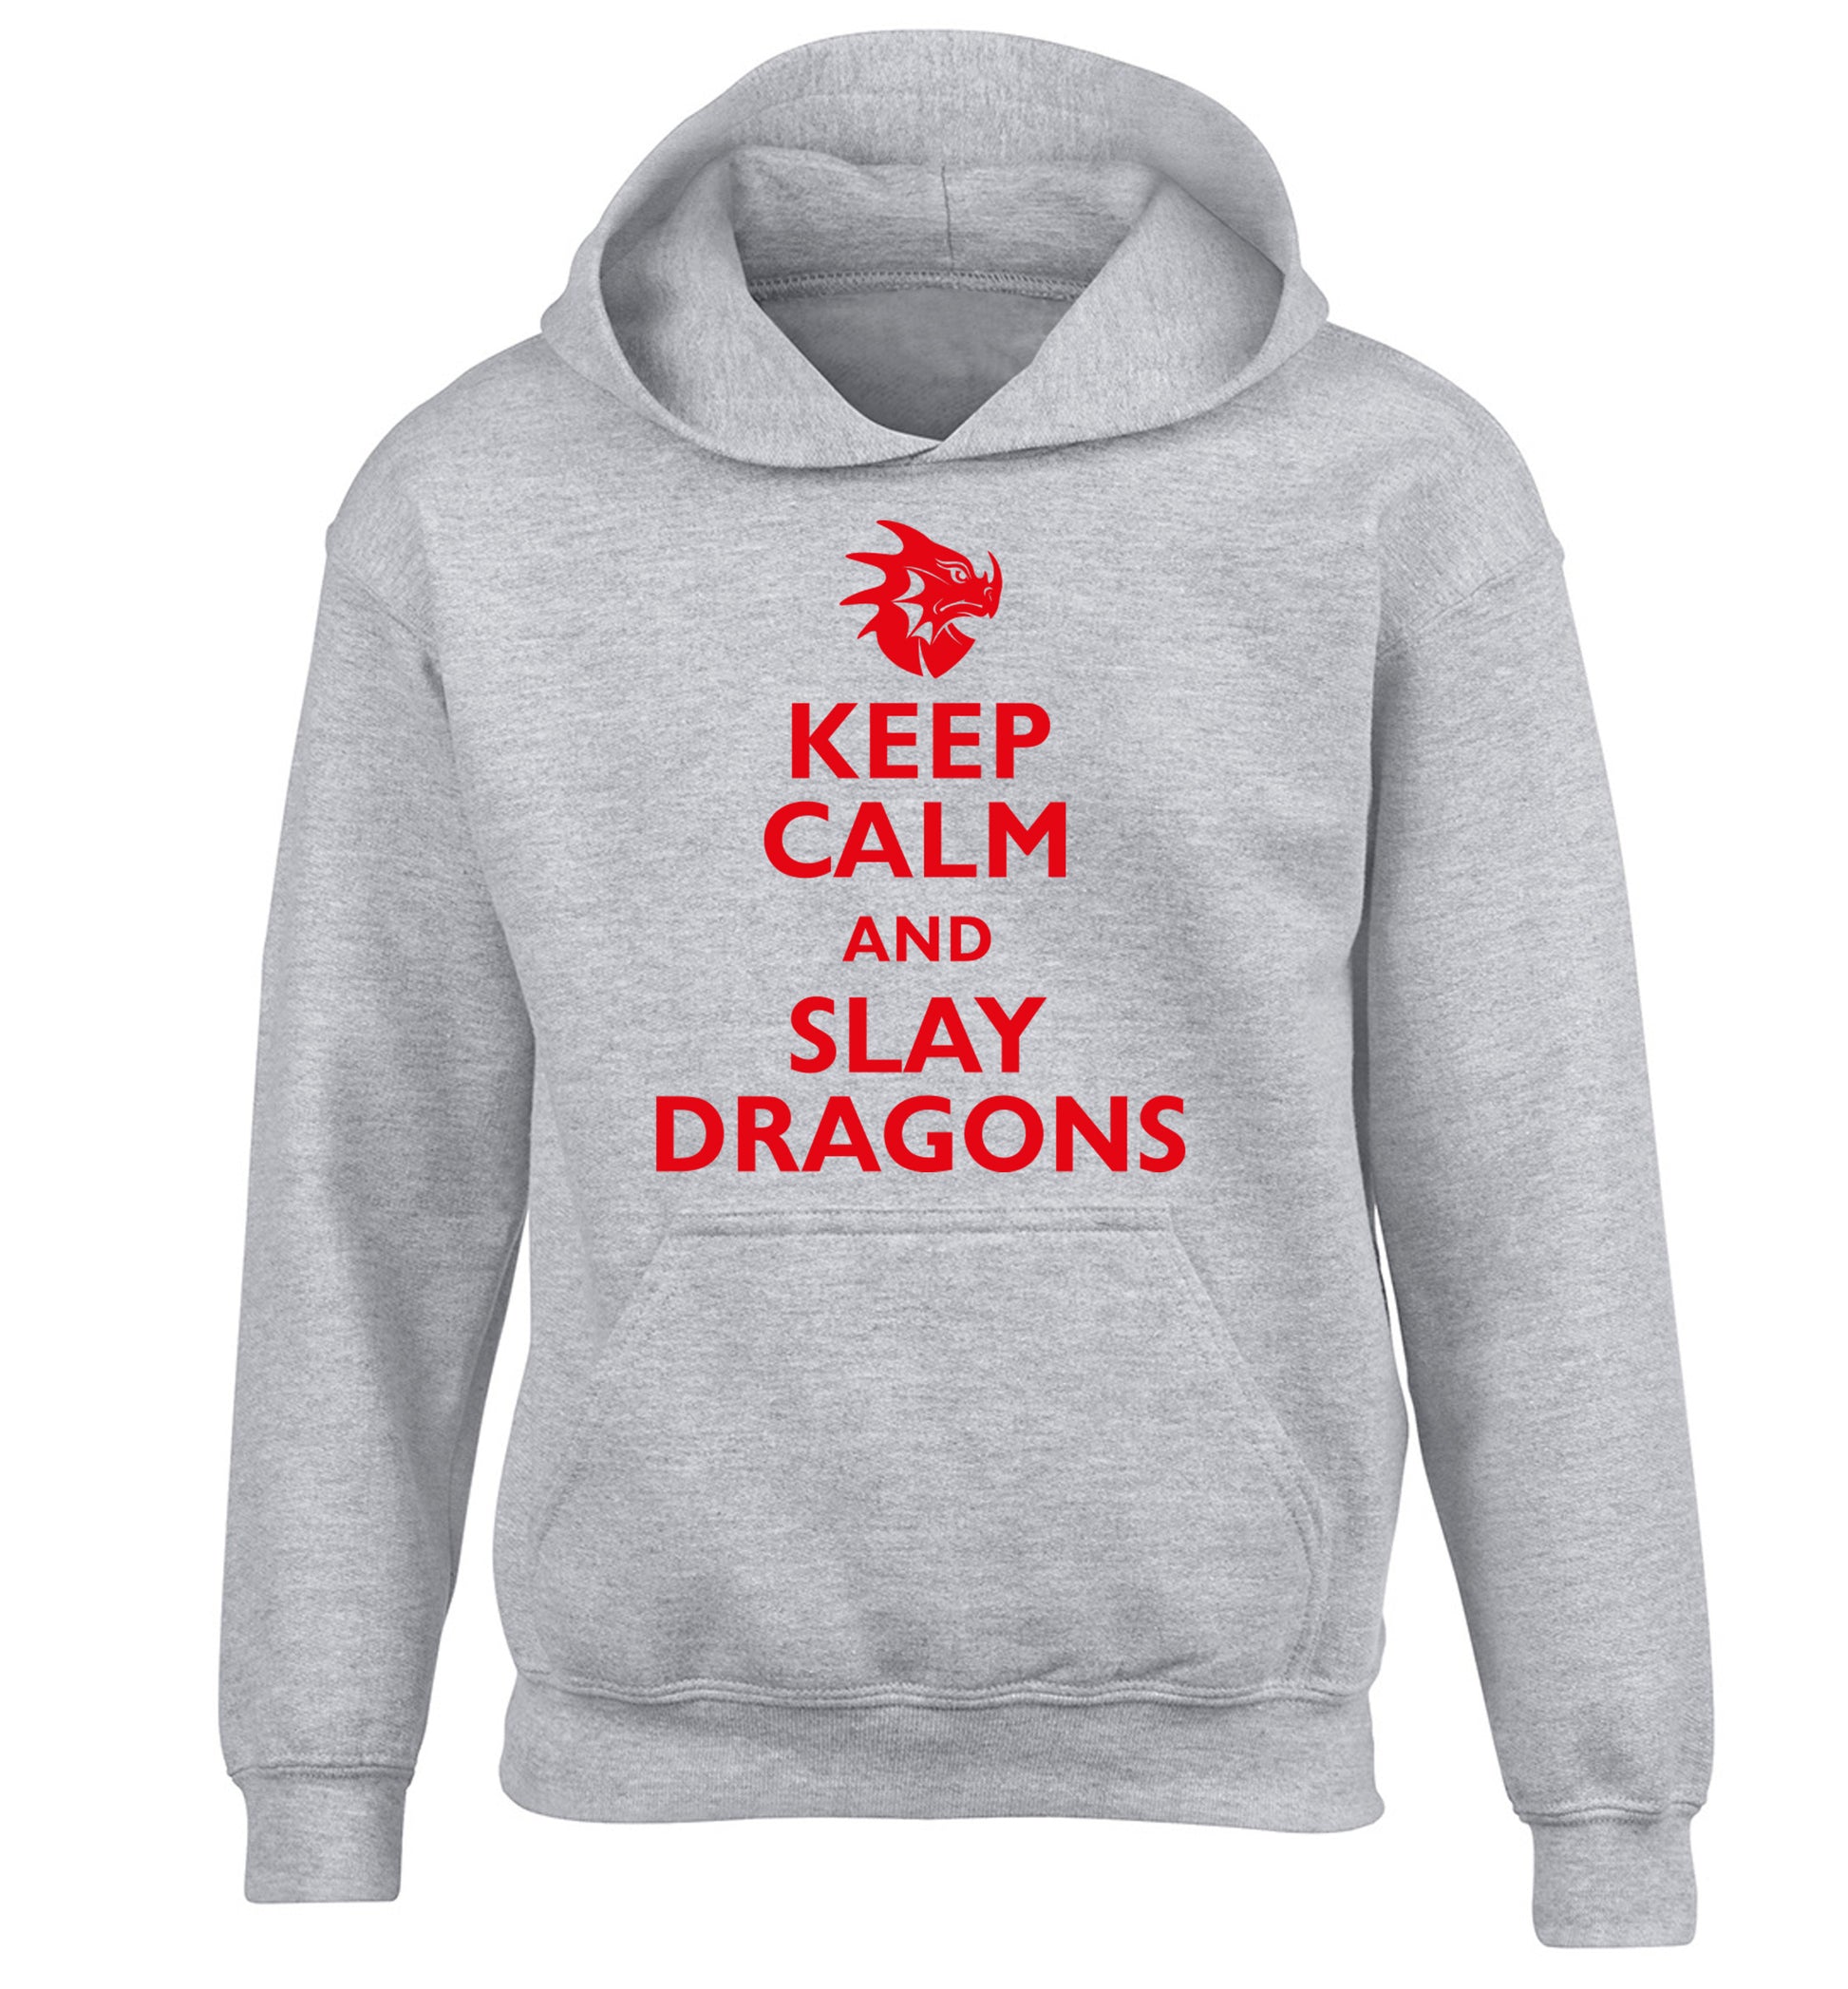 Keep calm and slay dragons children's grey hoodie 12-14 Years